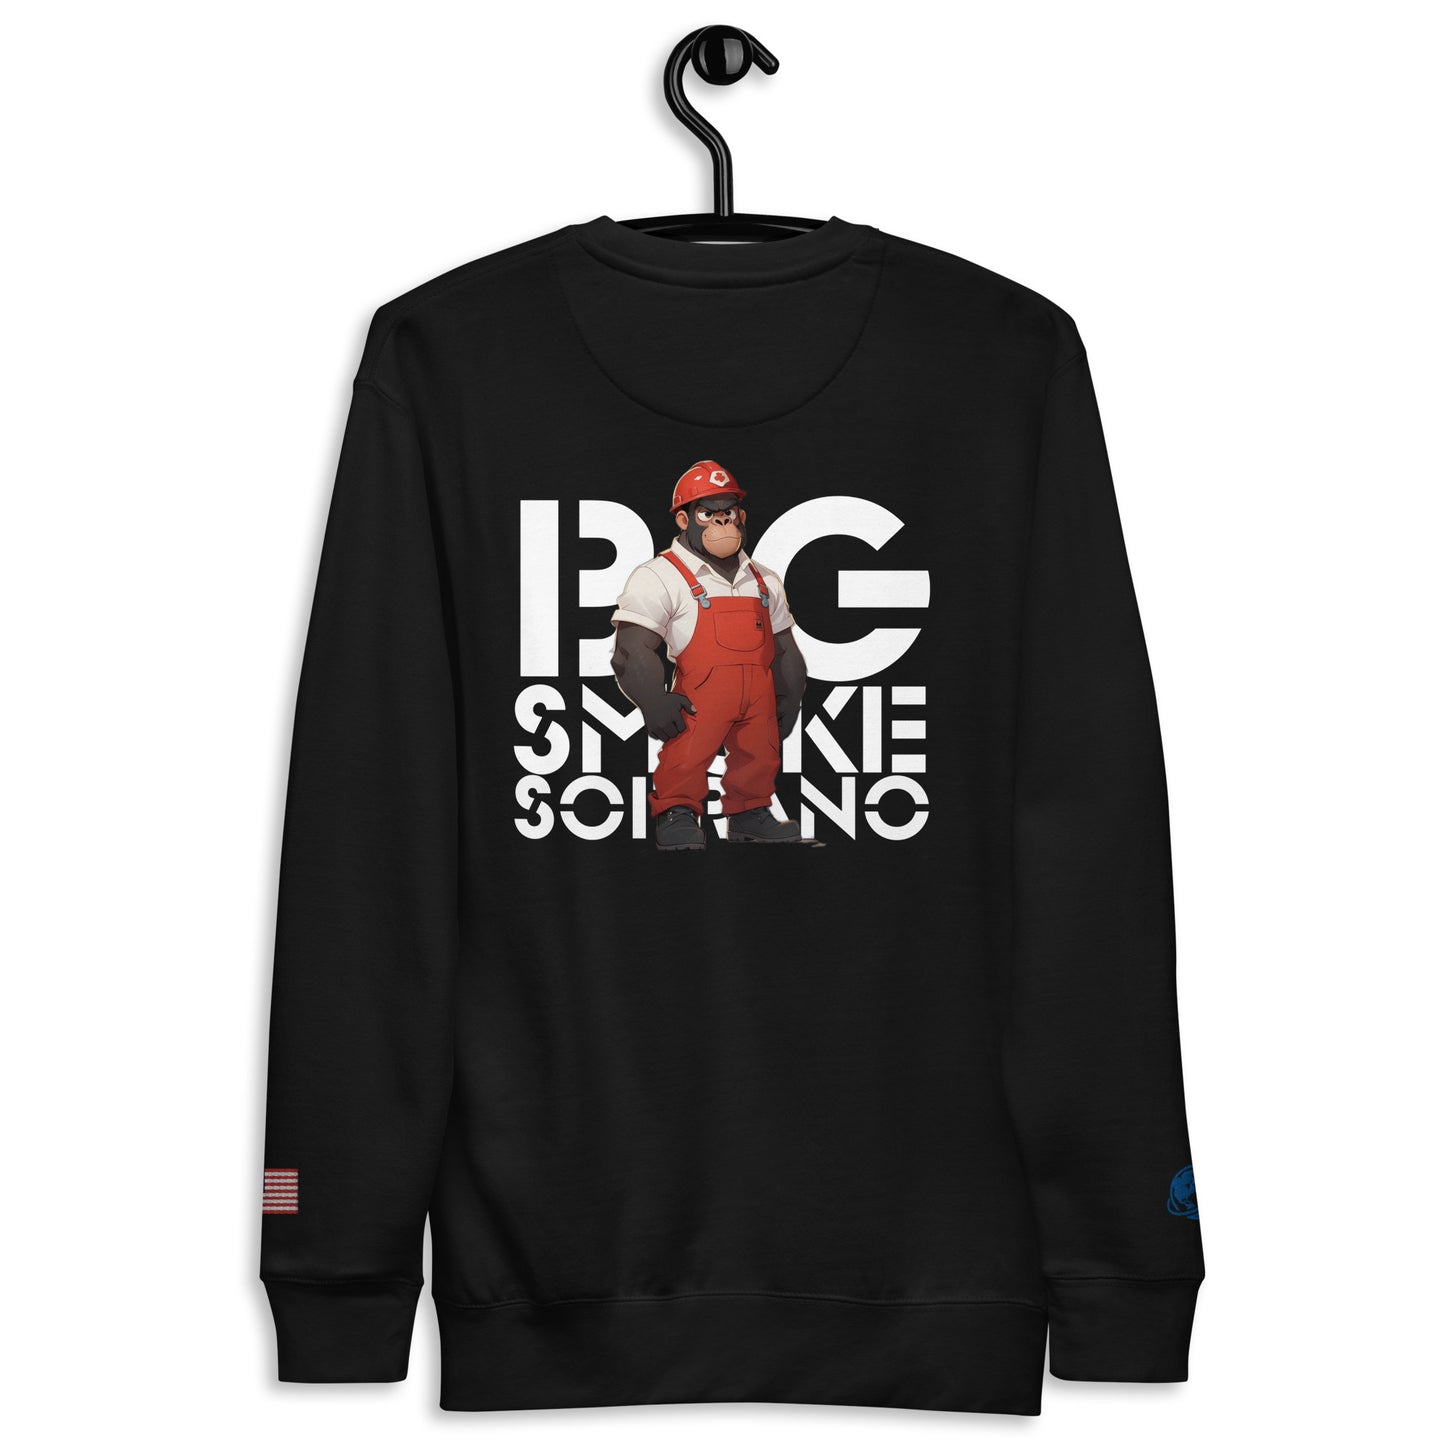 BigSmoke Soprano Clothing: BigSmoke Soprano Worldwide Collection: Big Motion Sweatshirt(USA Edition)